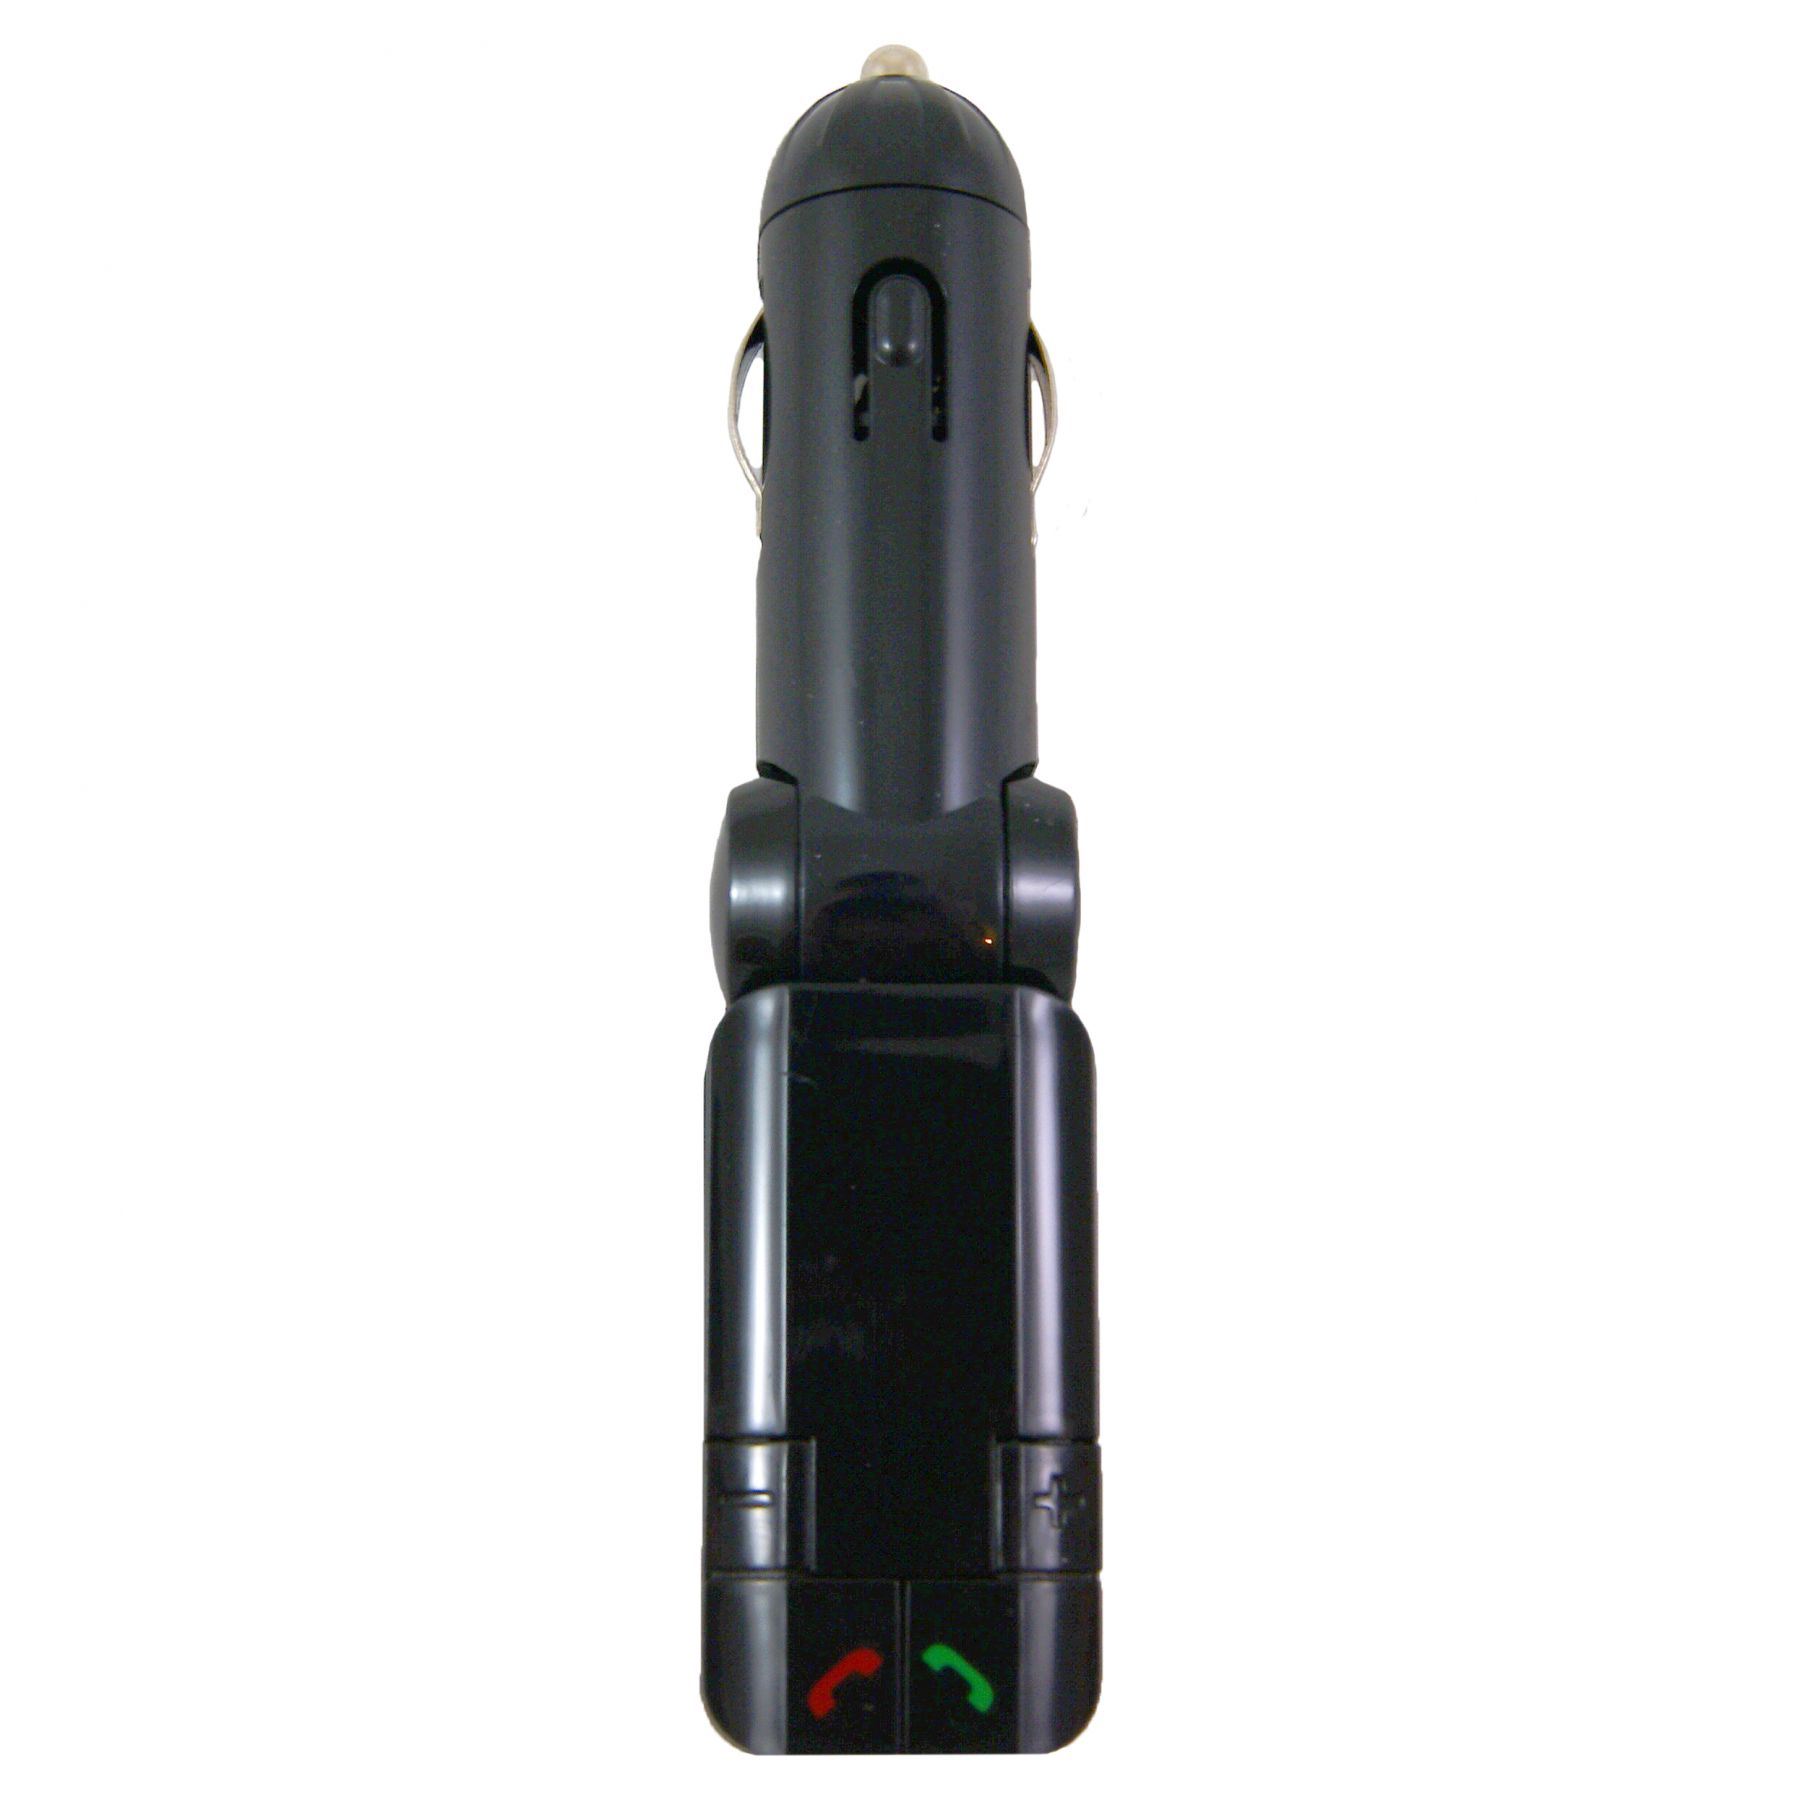 FM модулятор S-16 Bluetooth( 2USB, AUX , USB с функцией зарядки 2,1А, дисплей) упаковка-коробка